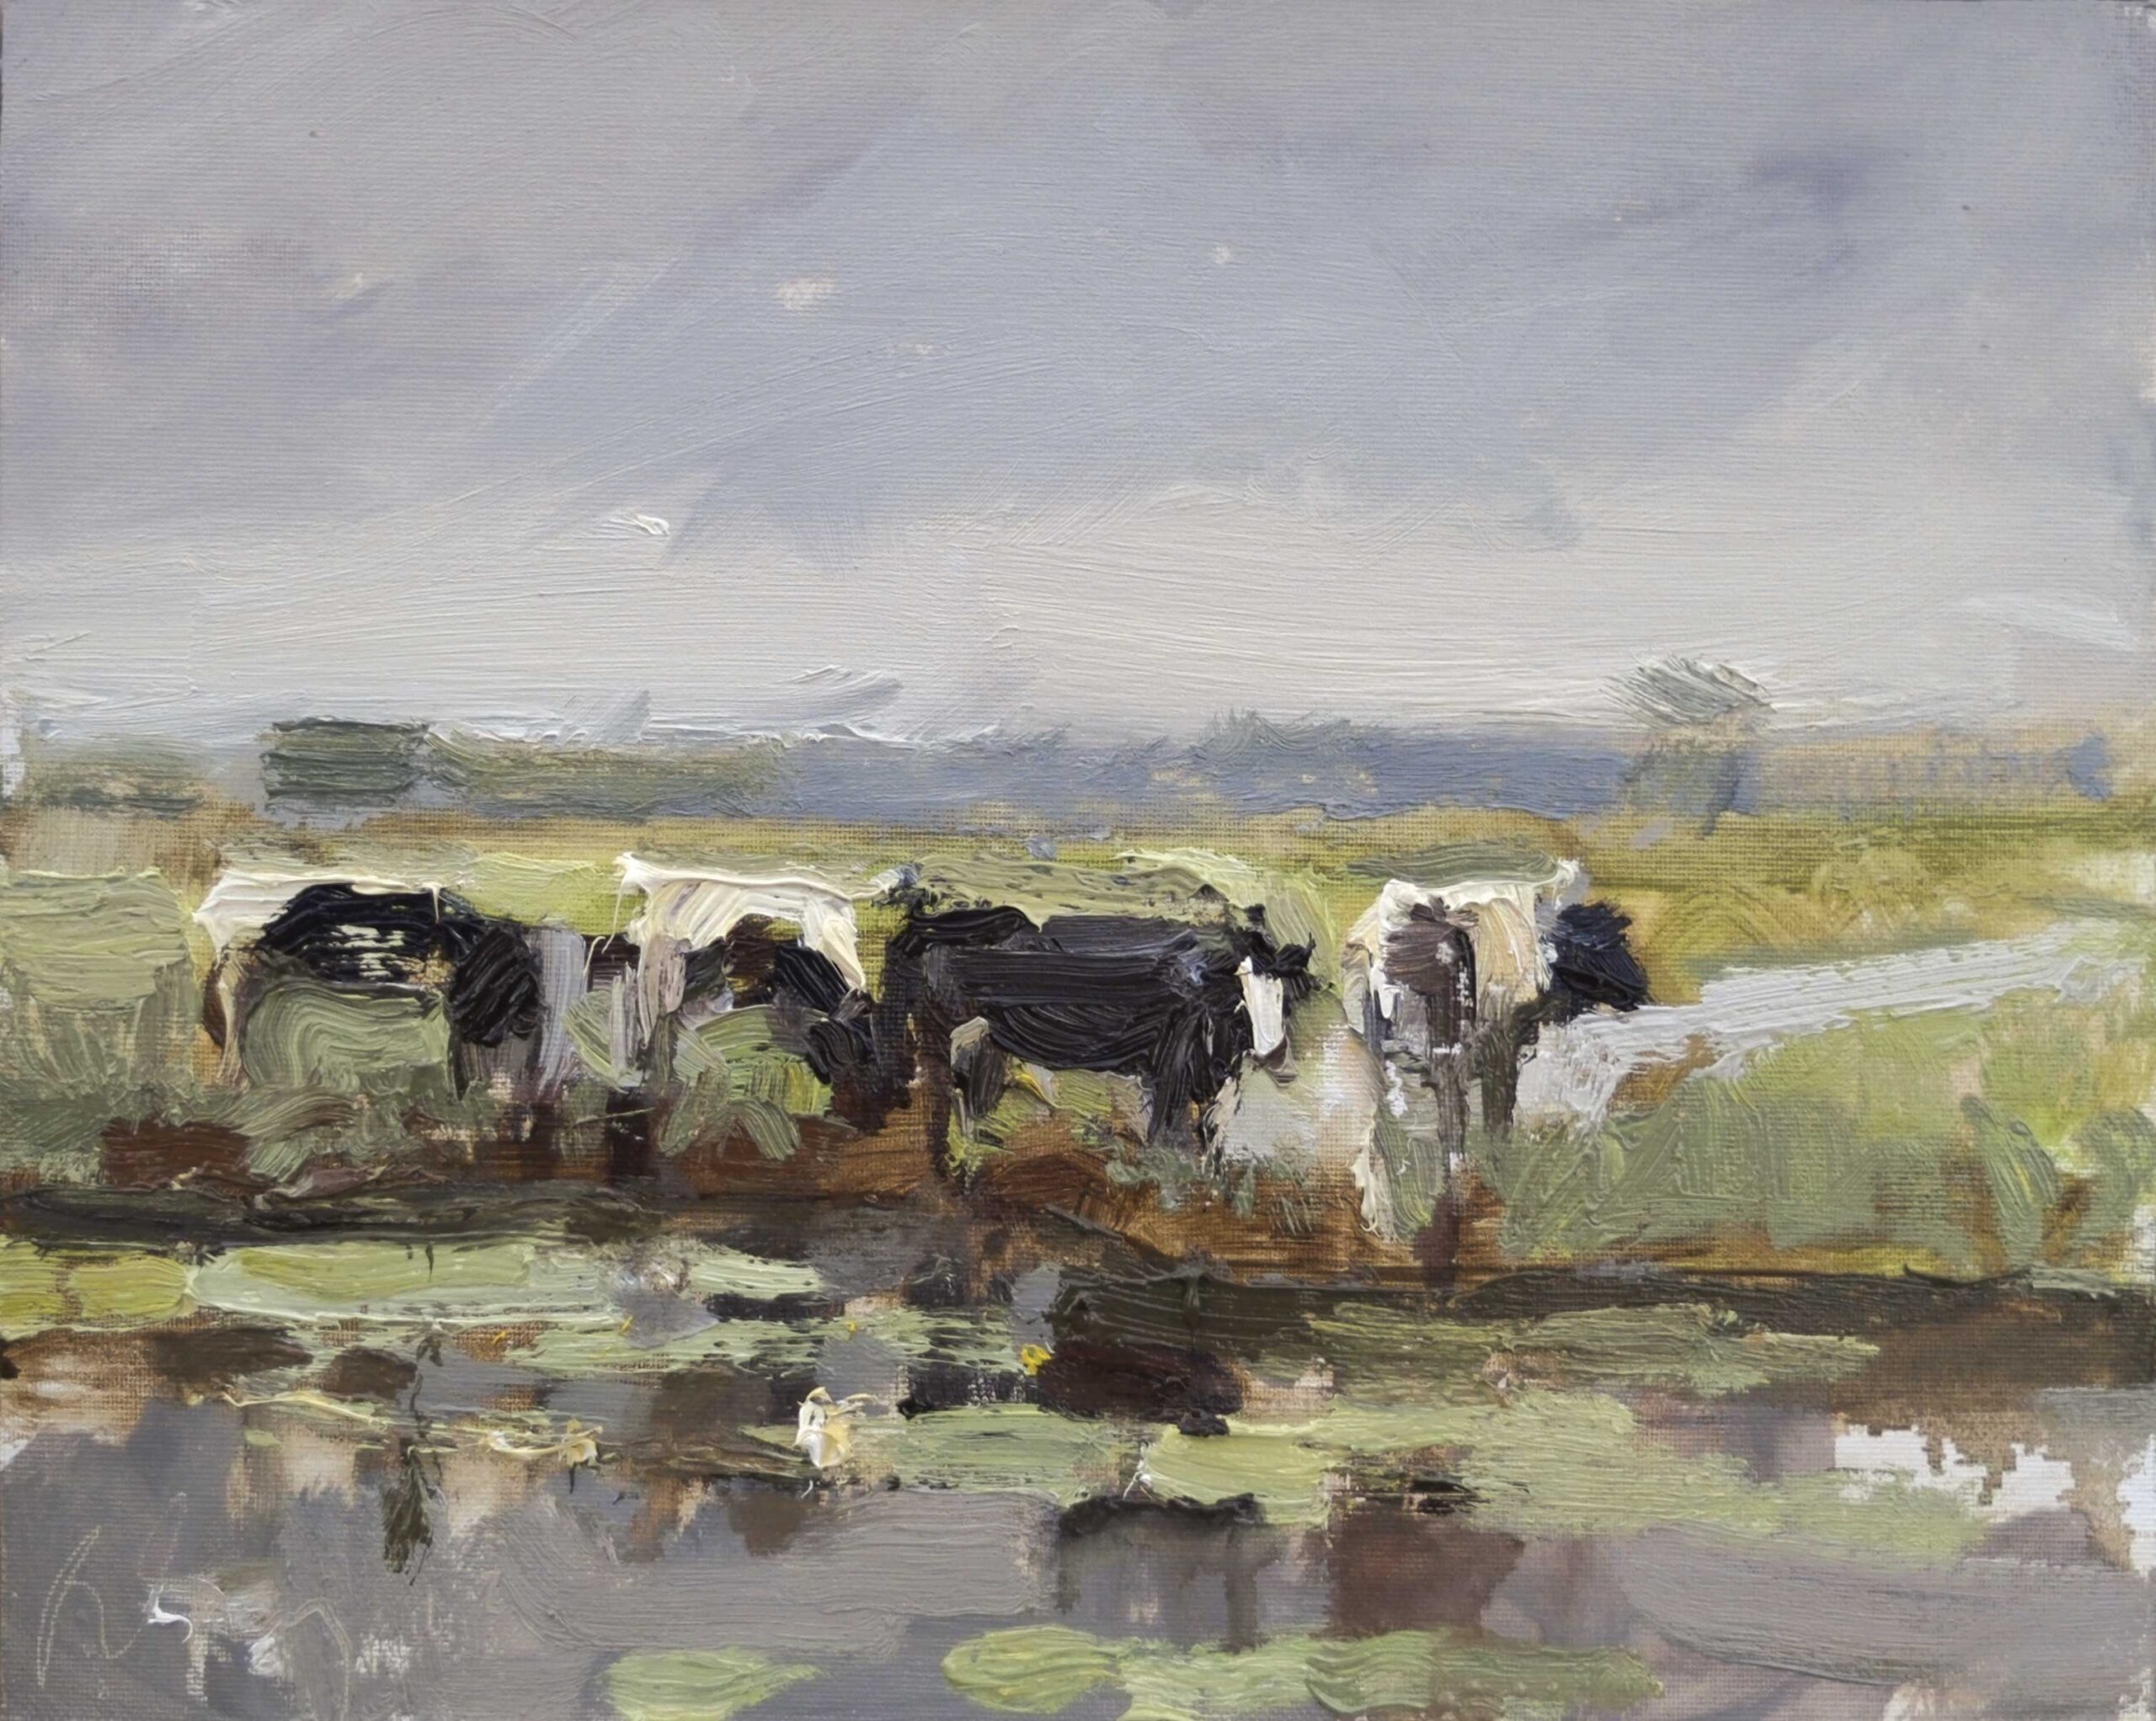 Plein air painting of cows